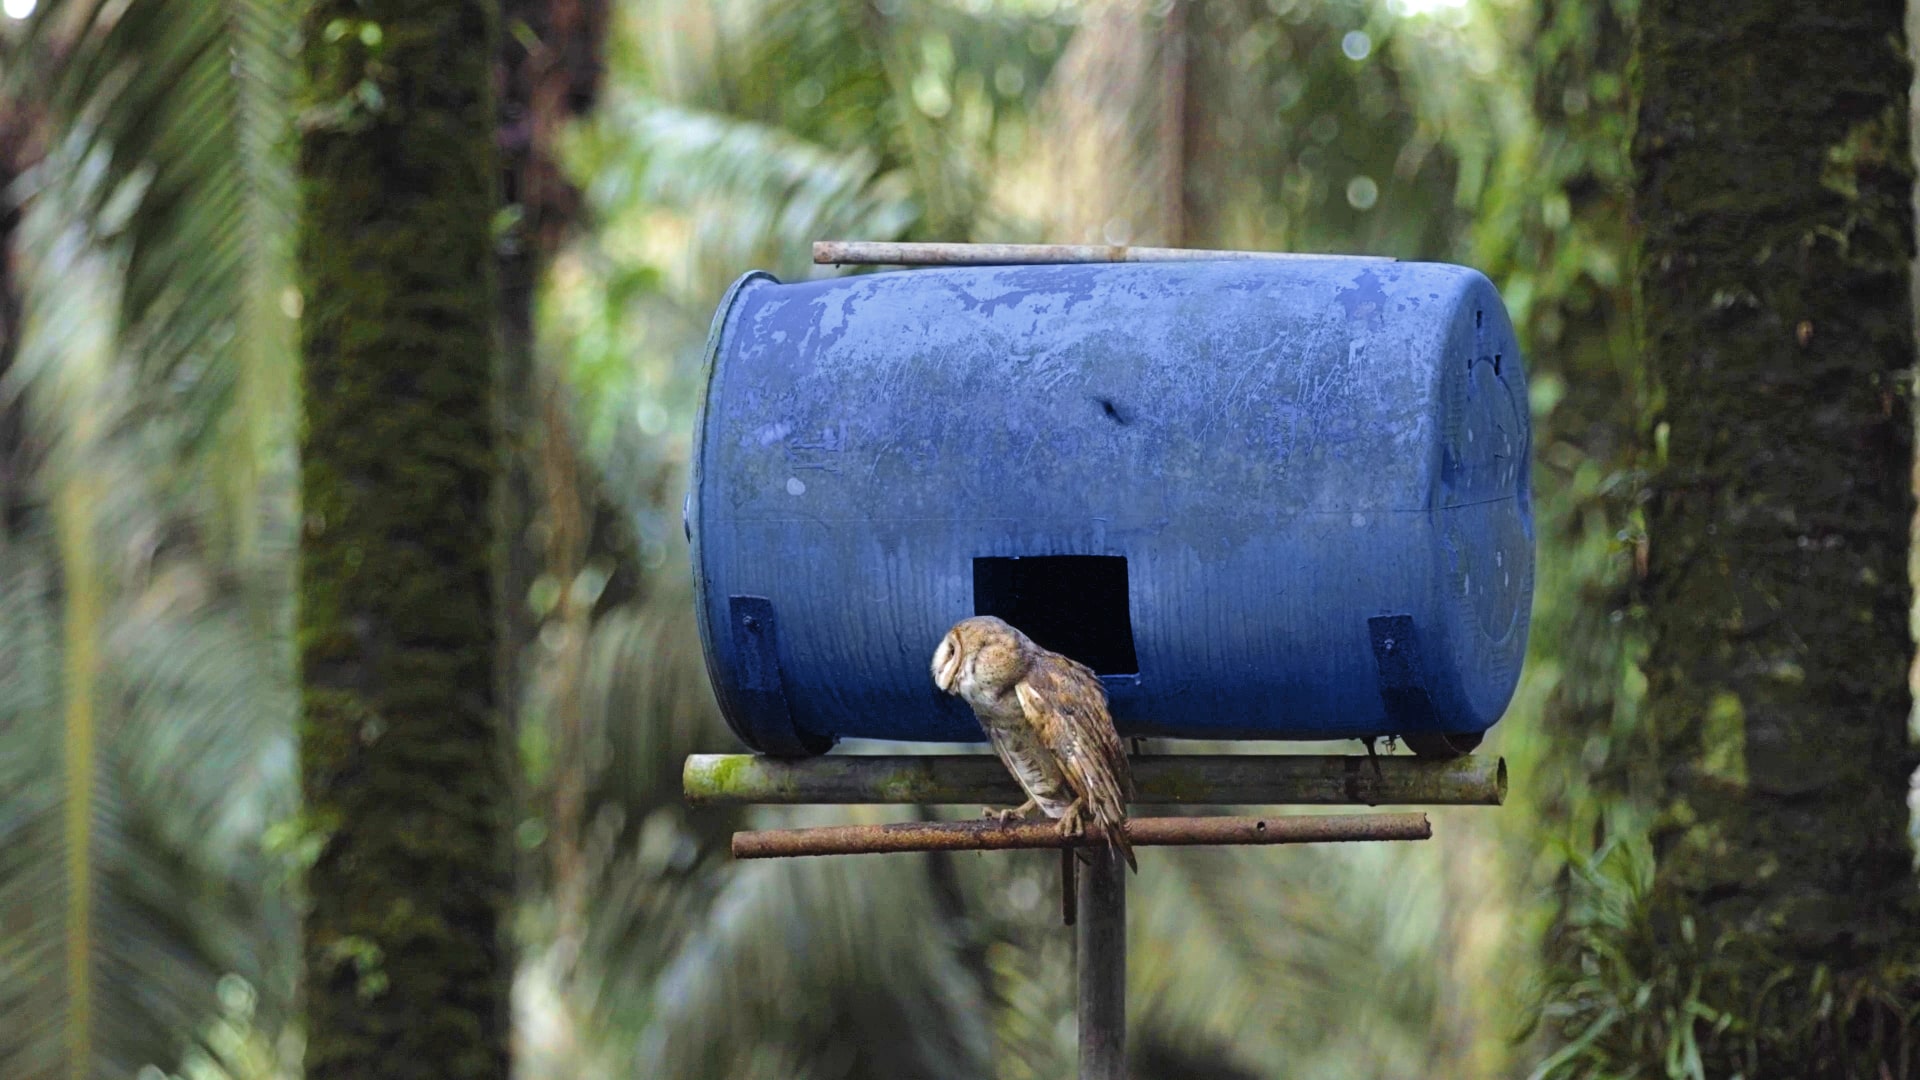 Musim Mas barn owl nest box in plantation